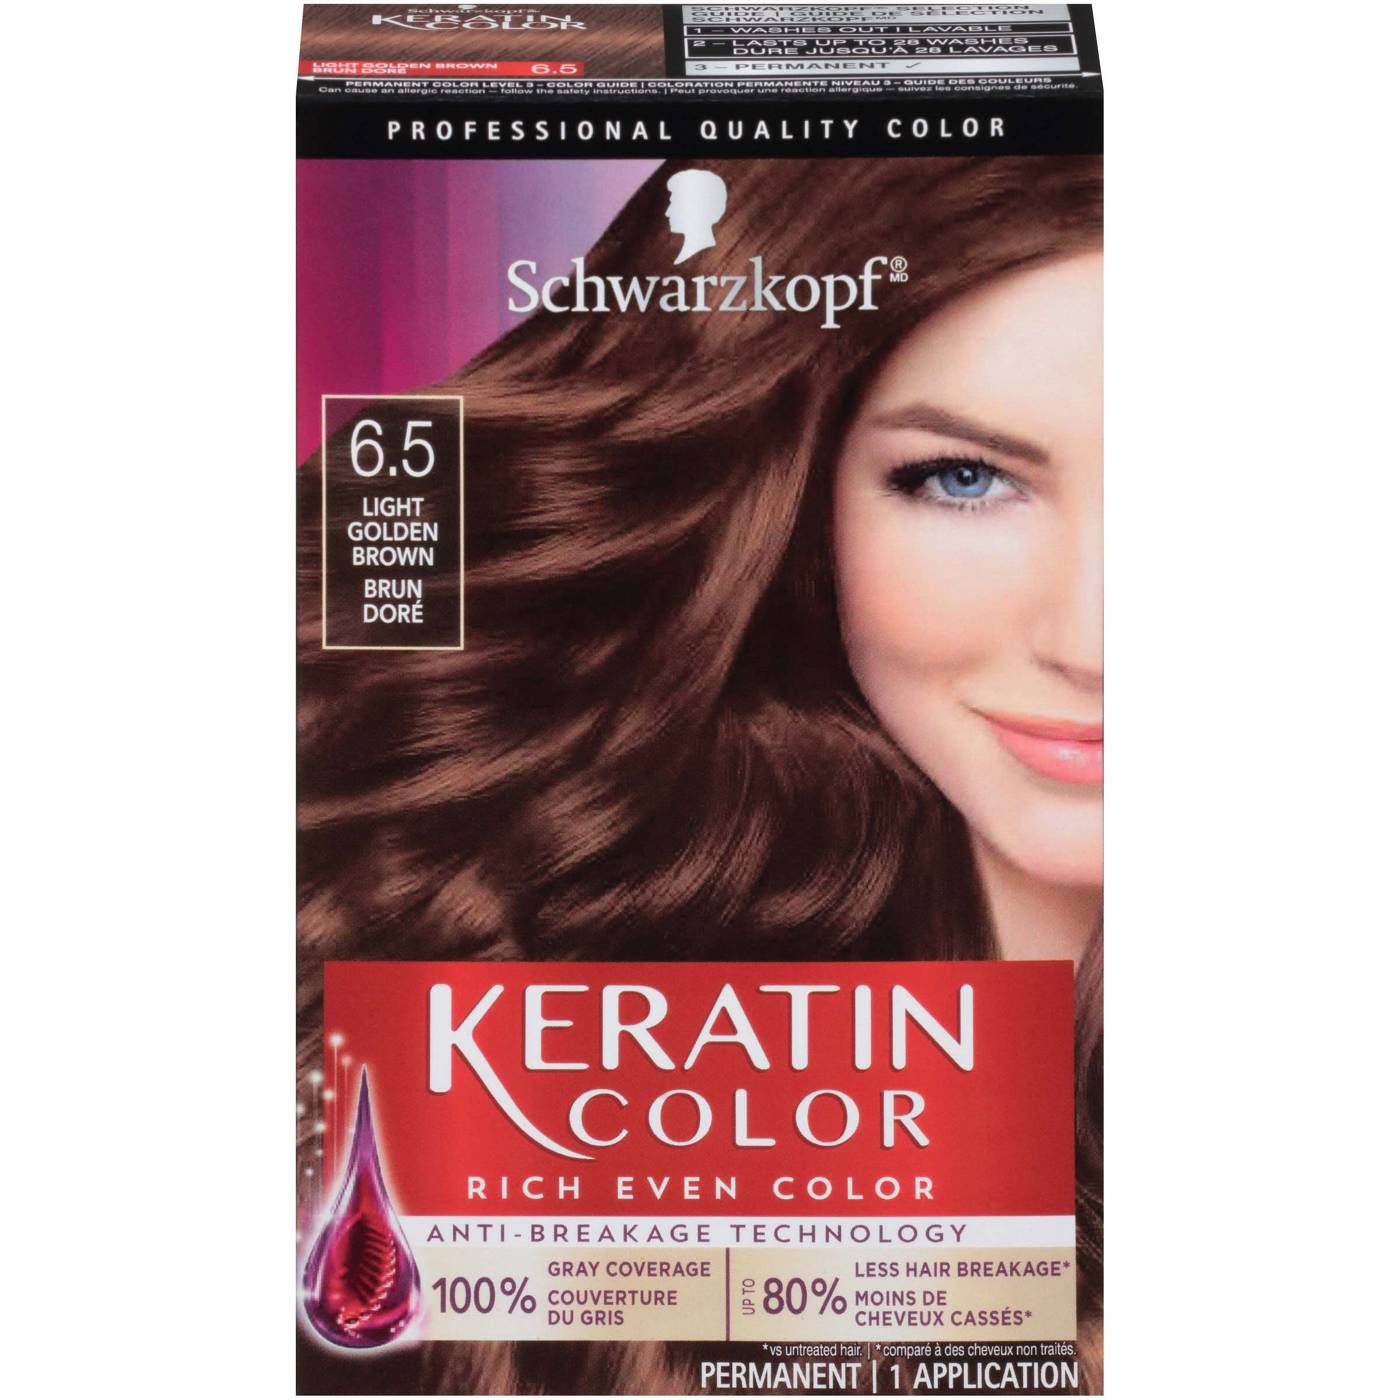 Schwarzkopf Keratin Color Permanent Hair Color Cream, 6.5 Light Golden Brown; image 1 of 5